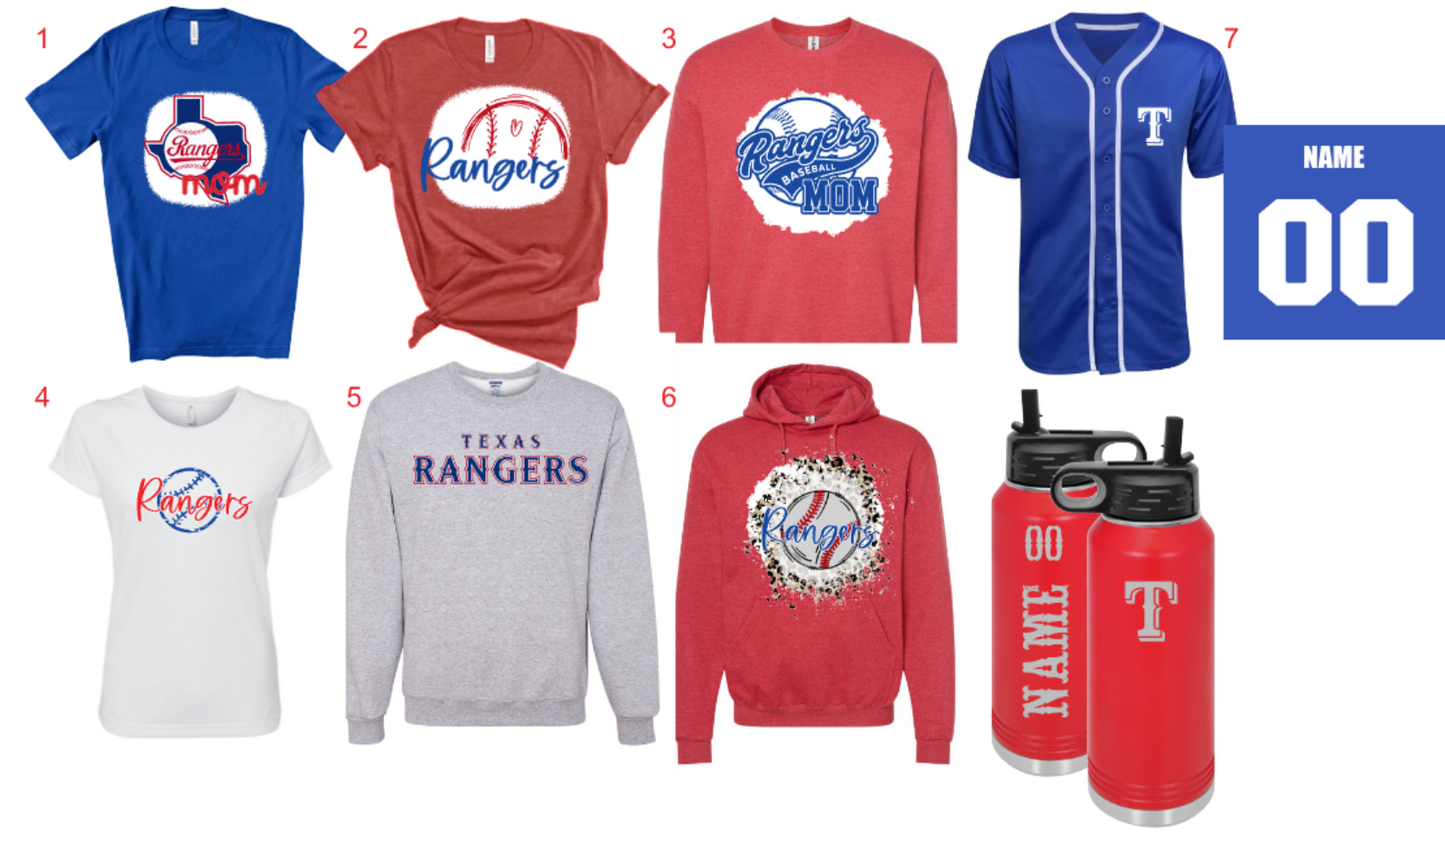 SBLL Rangers Shirt and Jersey Designs